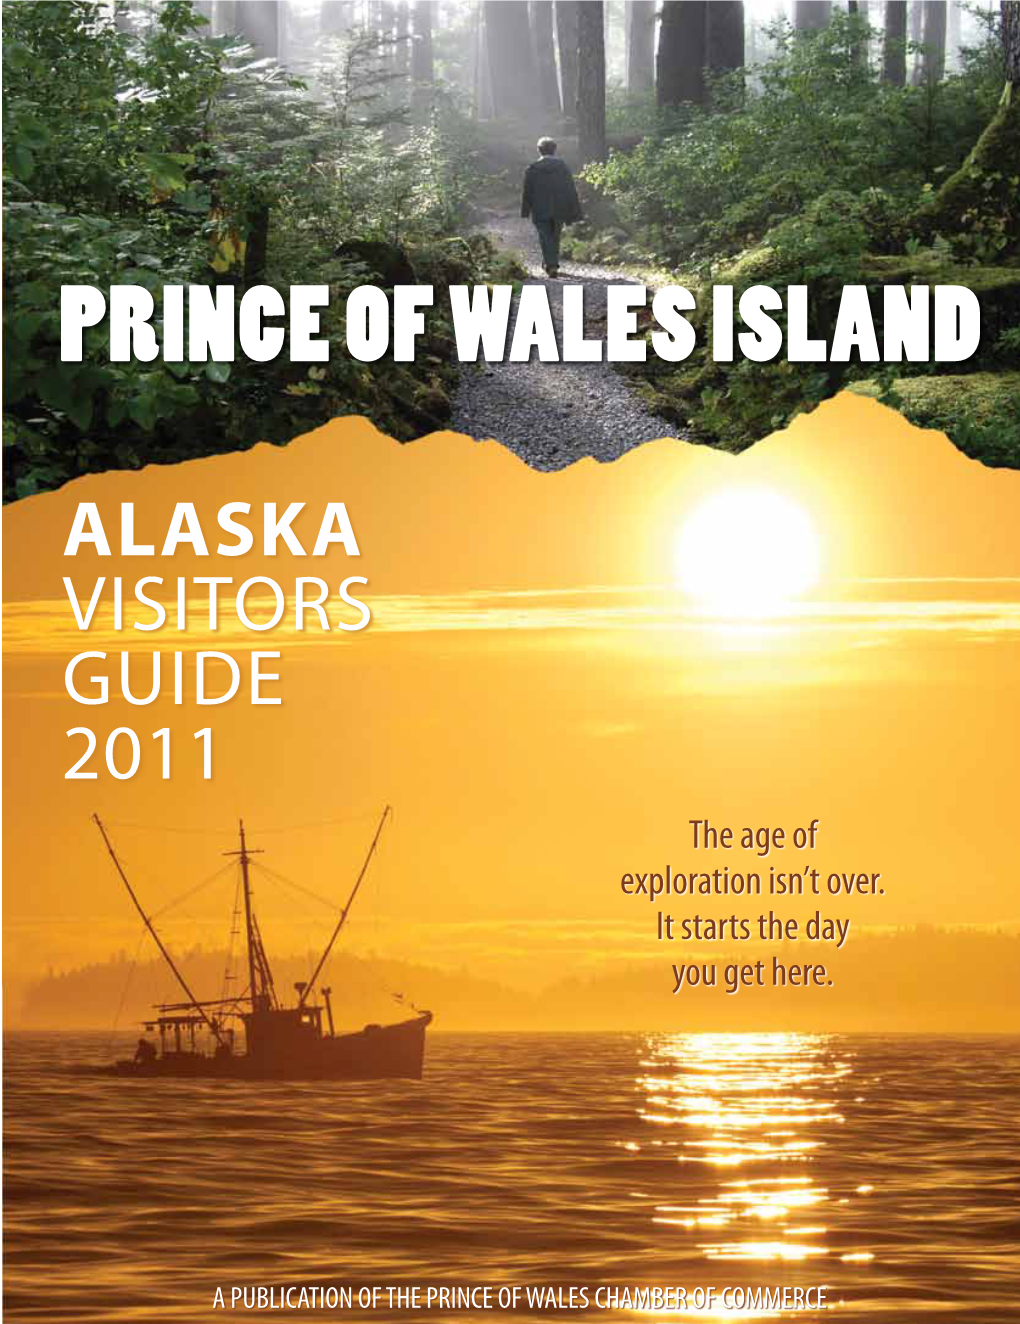 Prince of Wales Island